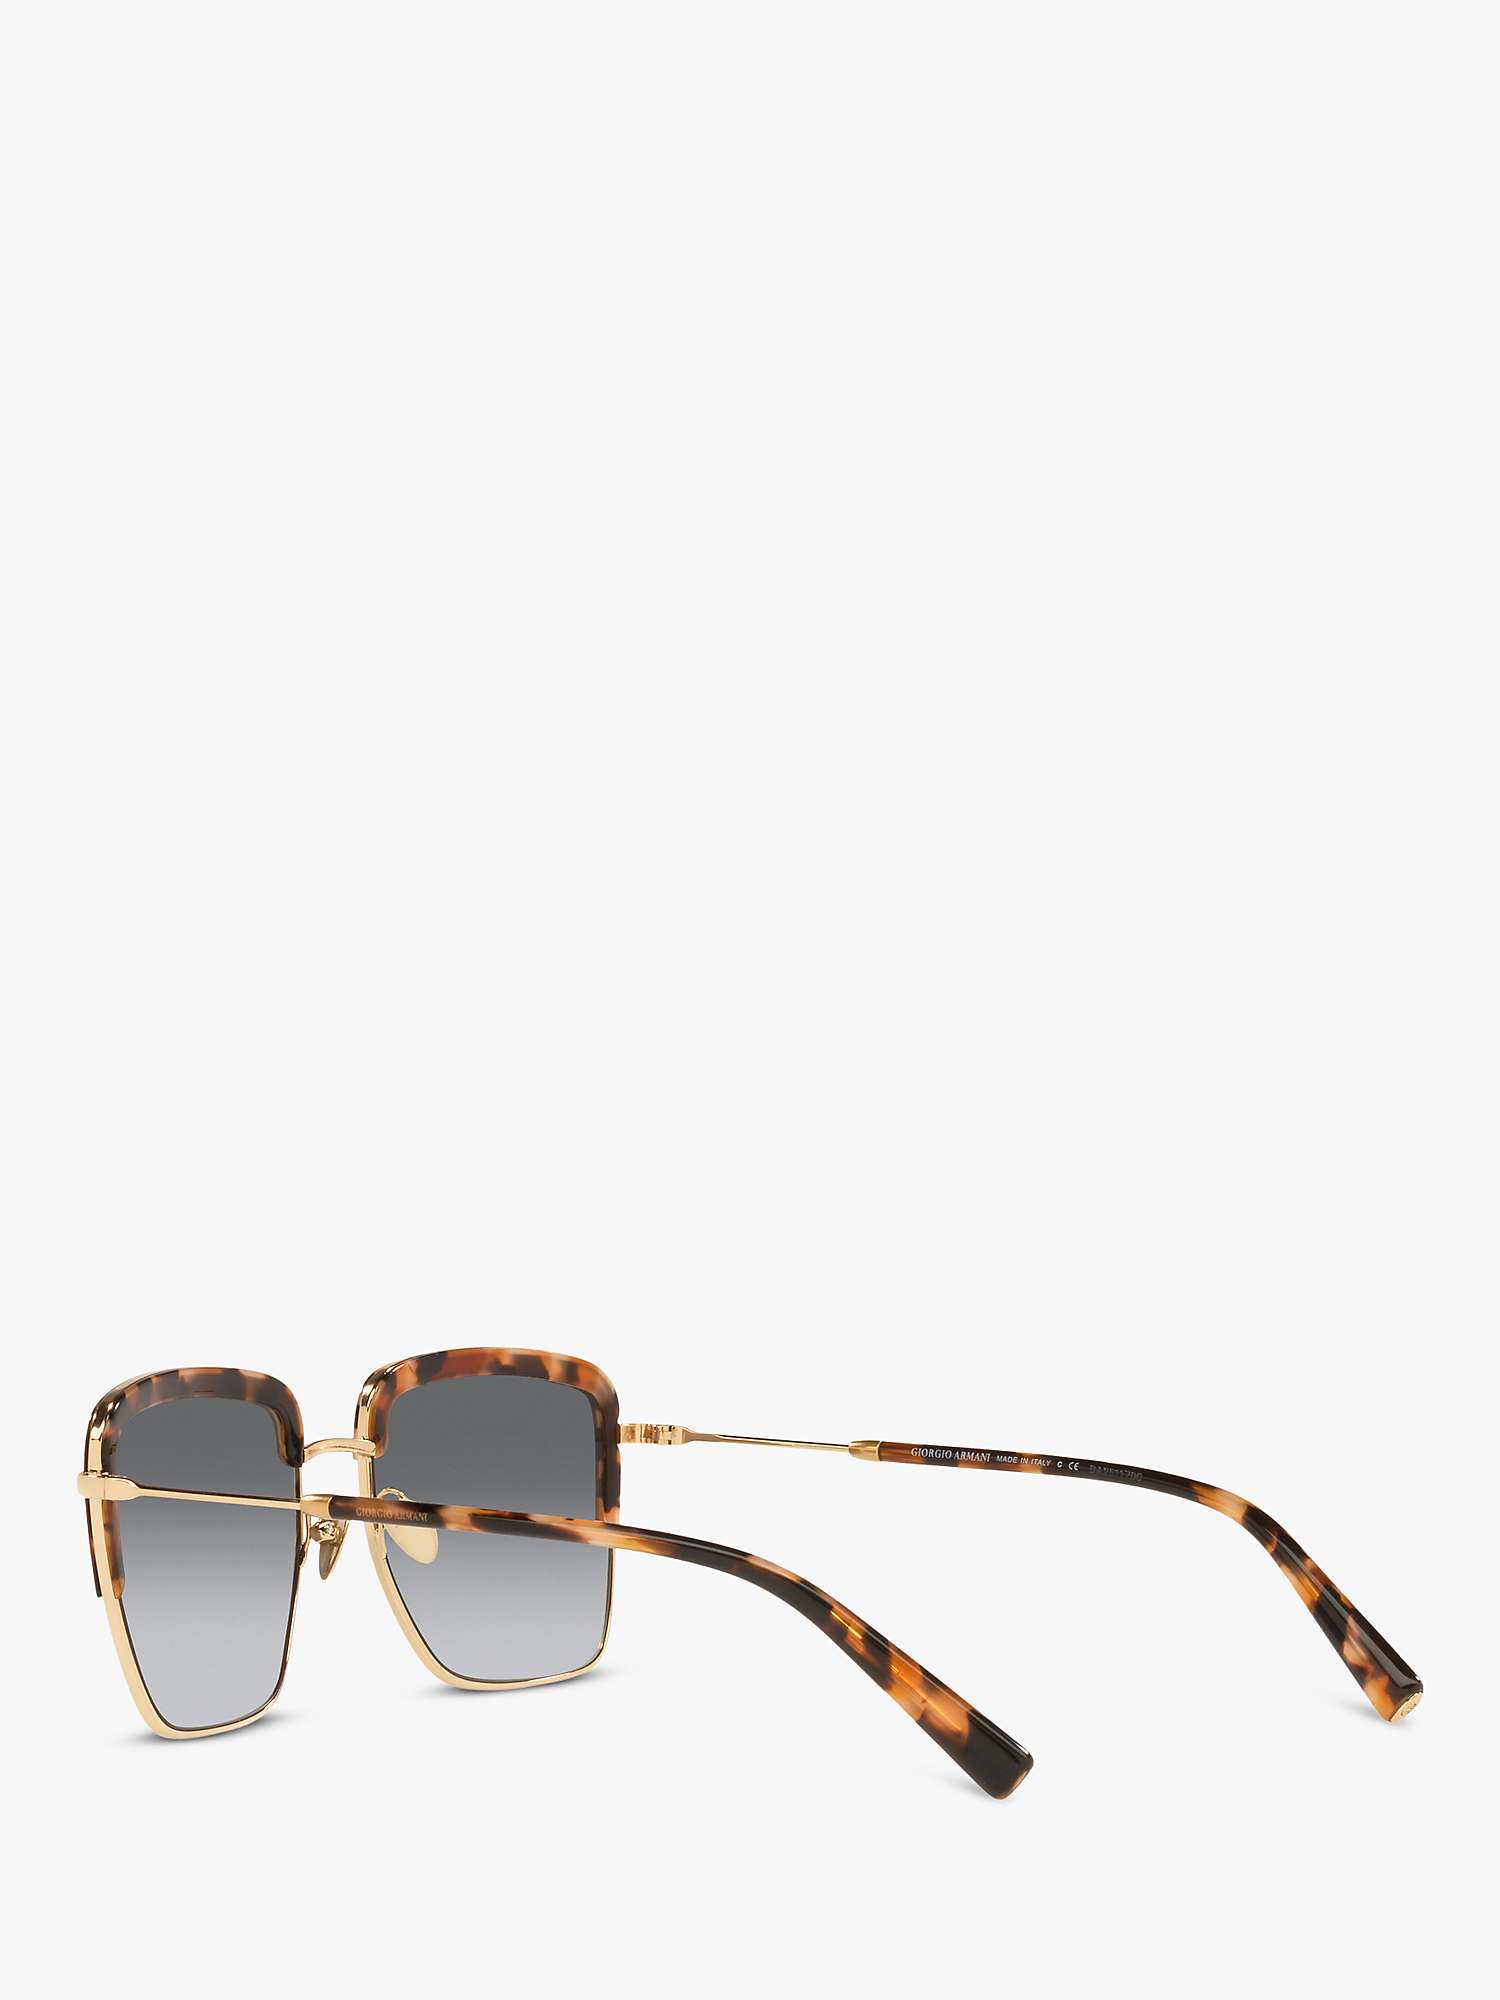 Buy Giorgio Armani AR6126 Women's Square Sunglasses Online at johnlewis.com